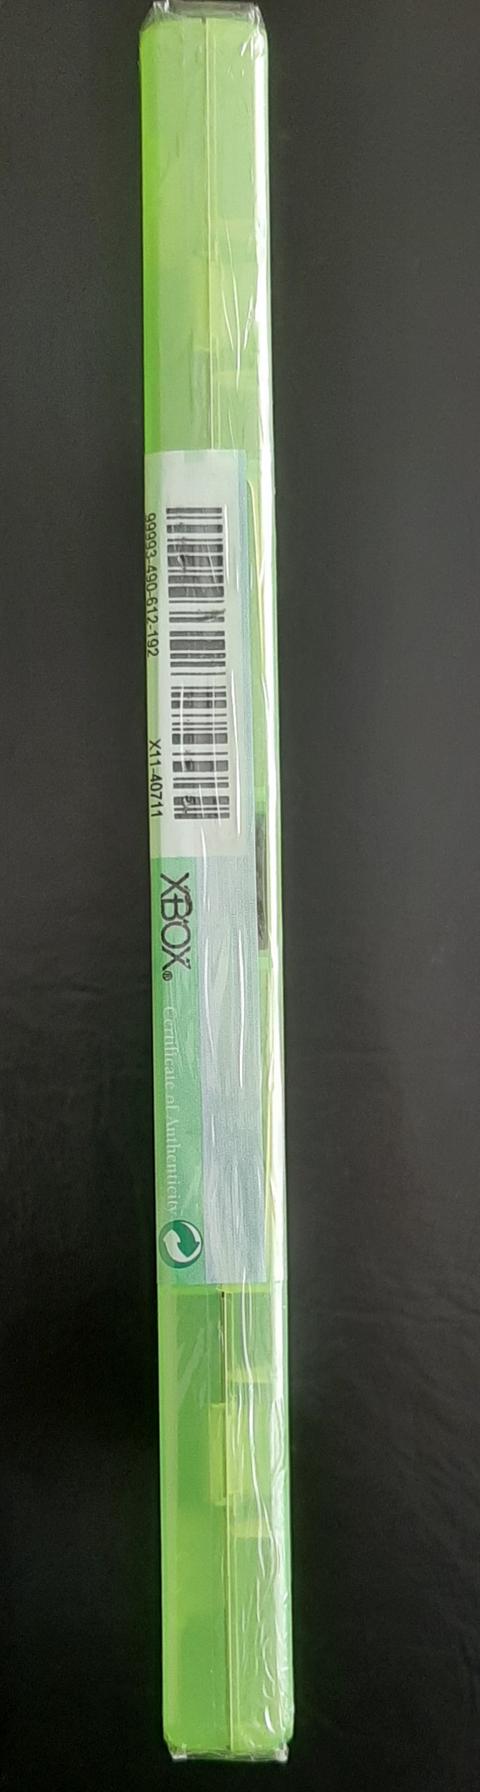 Xbox 360 Dead Space - Açılmamış sıfır ambalajında